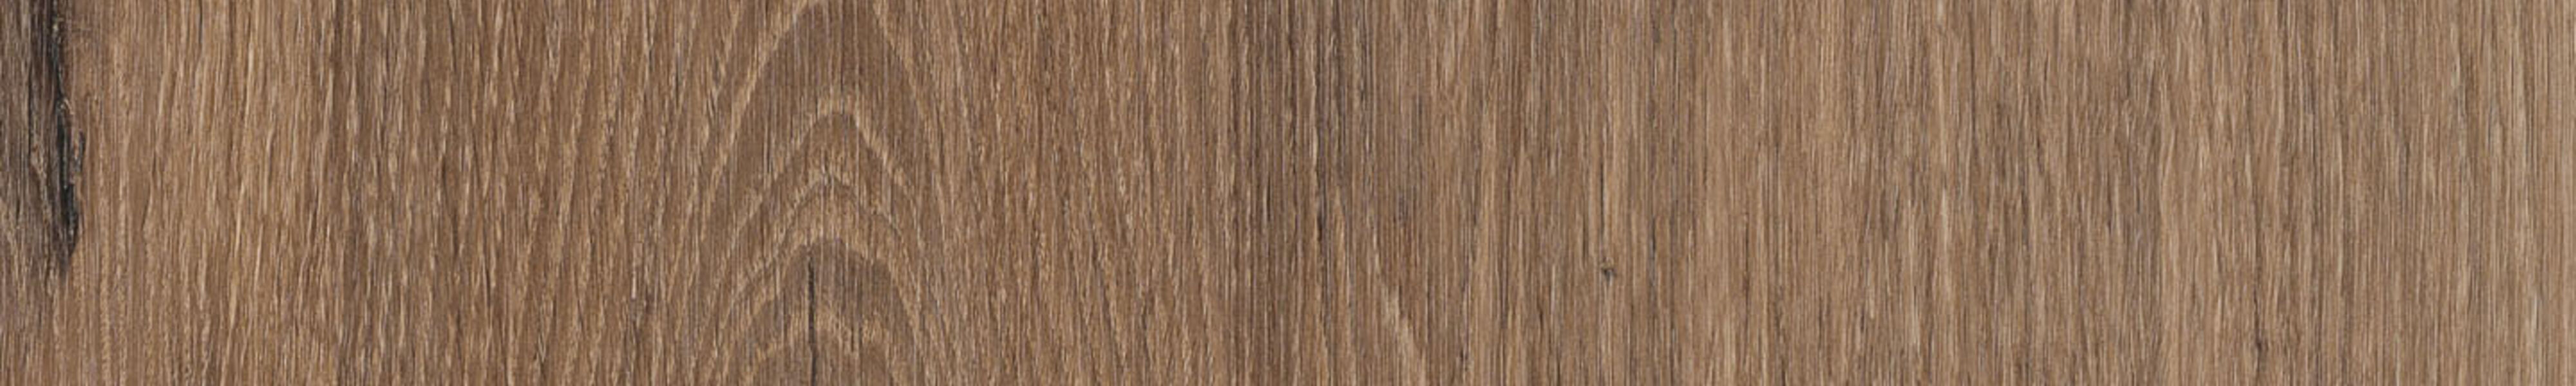 skai® structure Viking Oak brown          0,43 1440